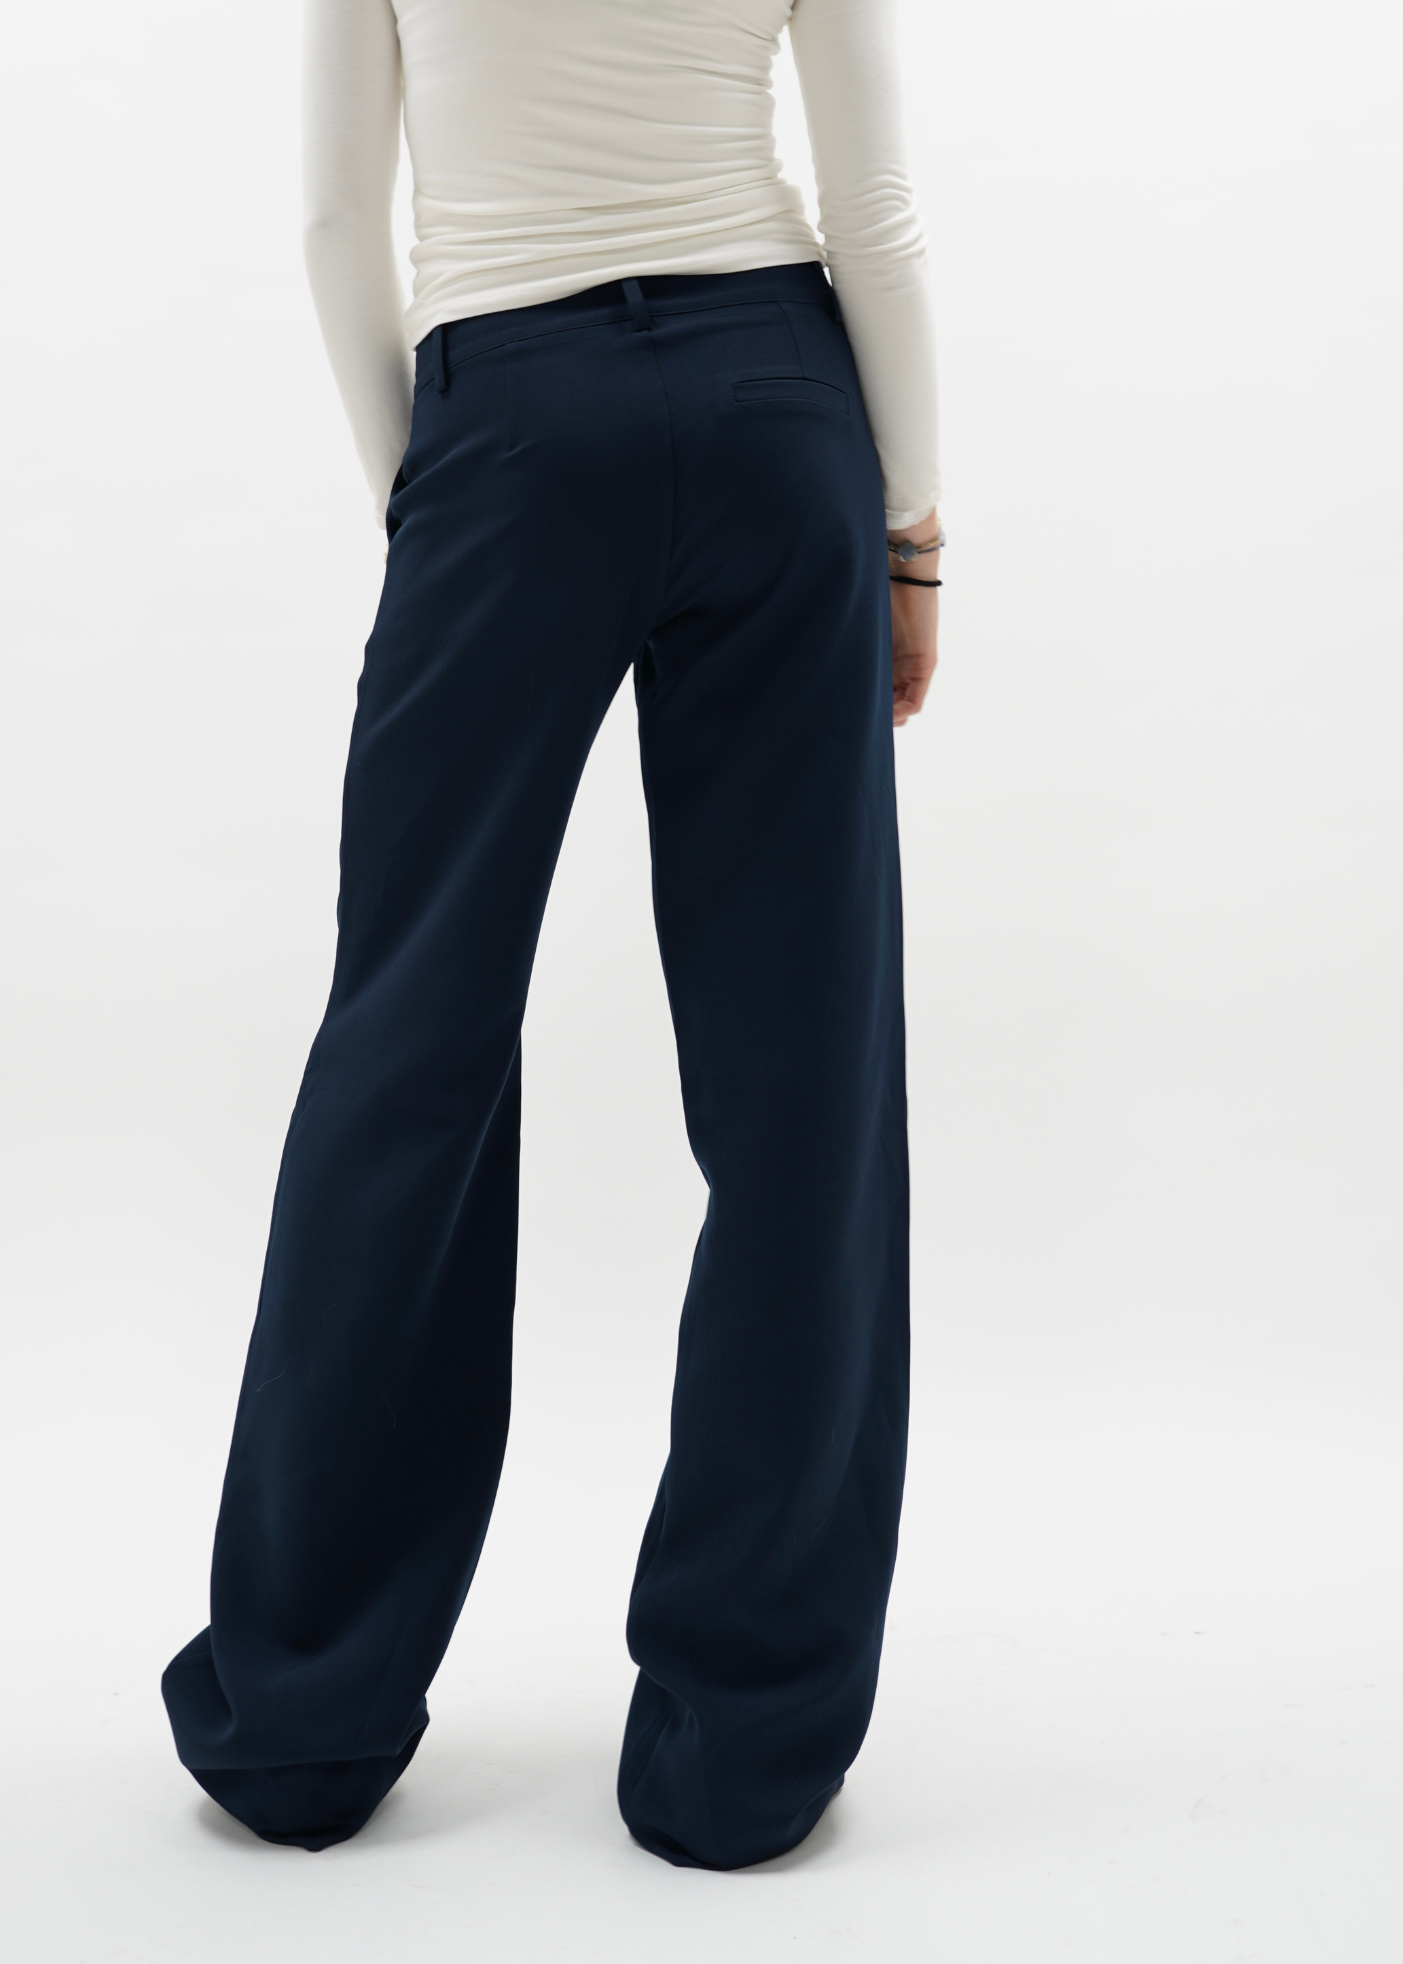 Low/mid waist straight leg pants casual night blue (REGULAR)